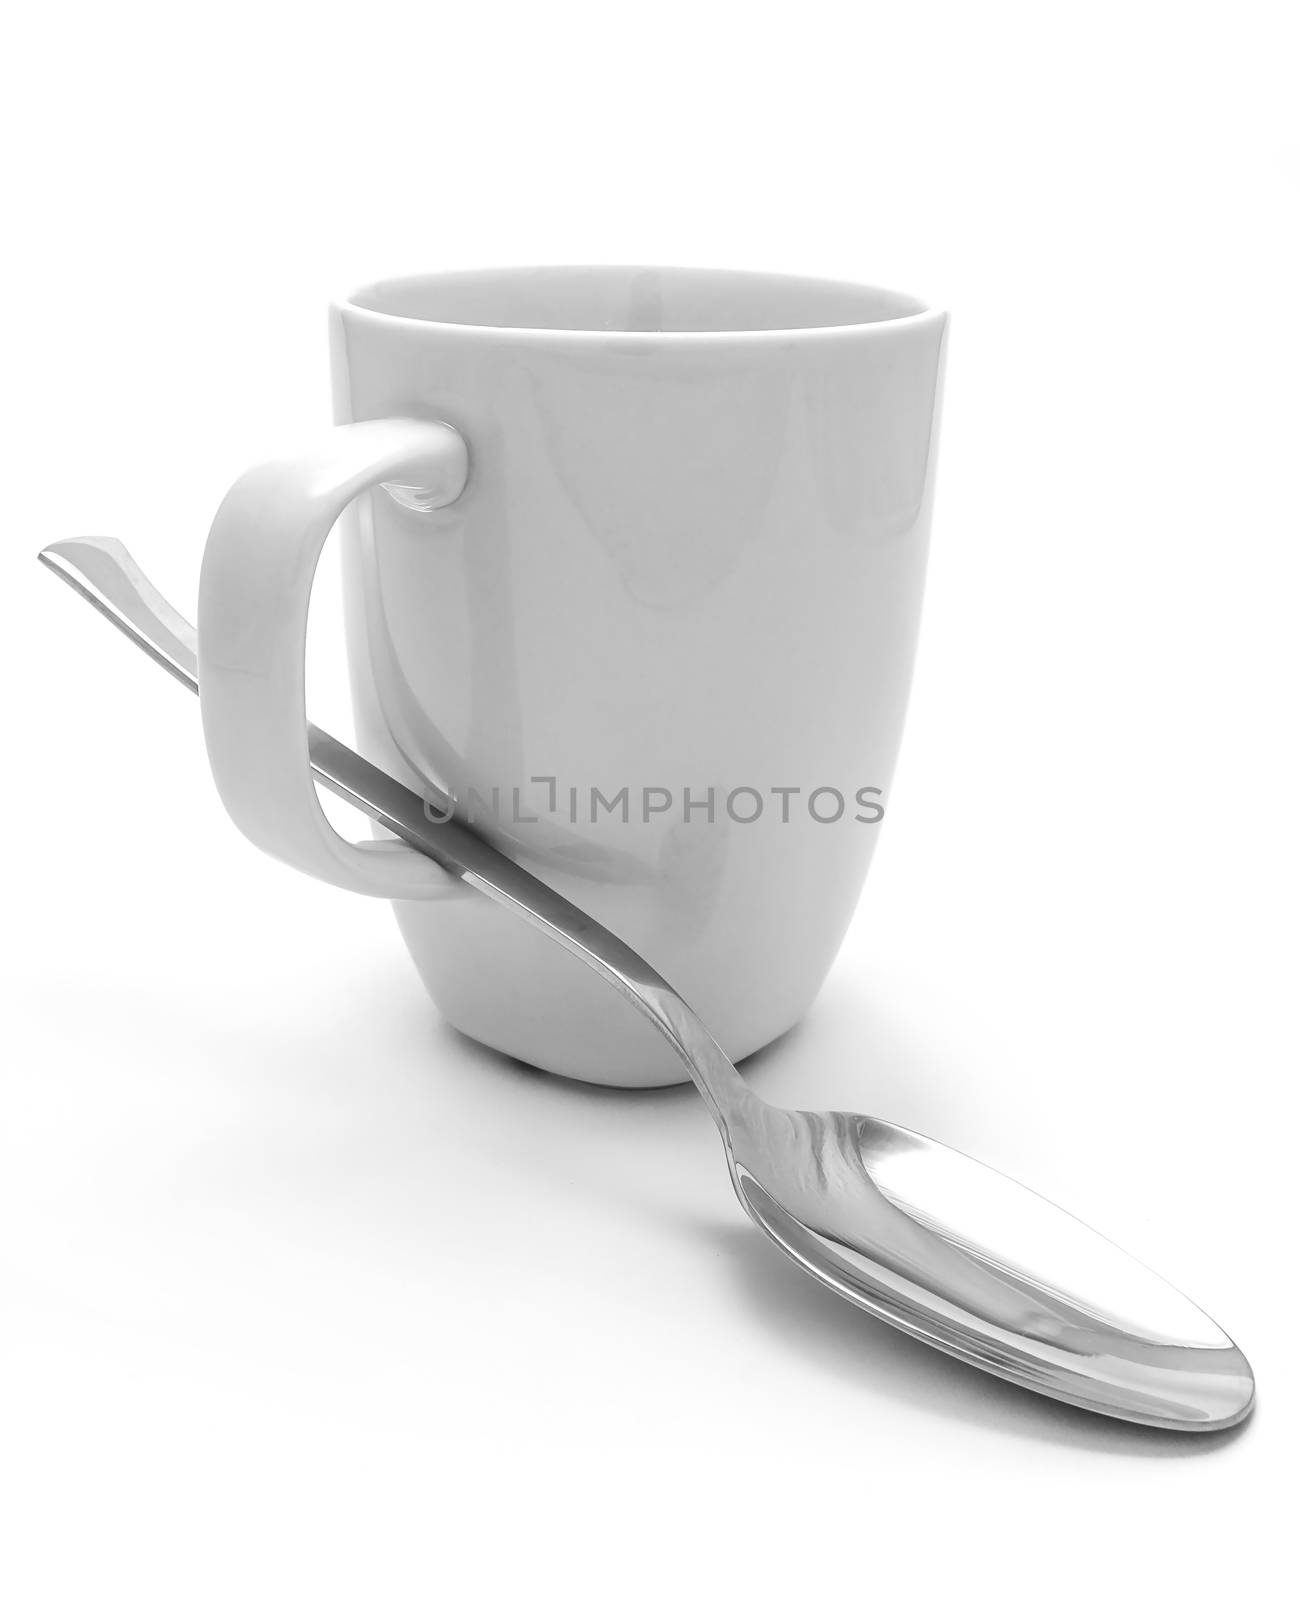 White mug and spoon on white background